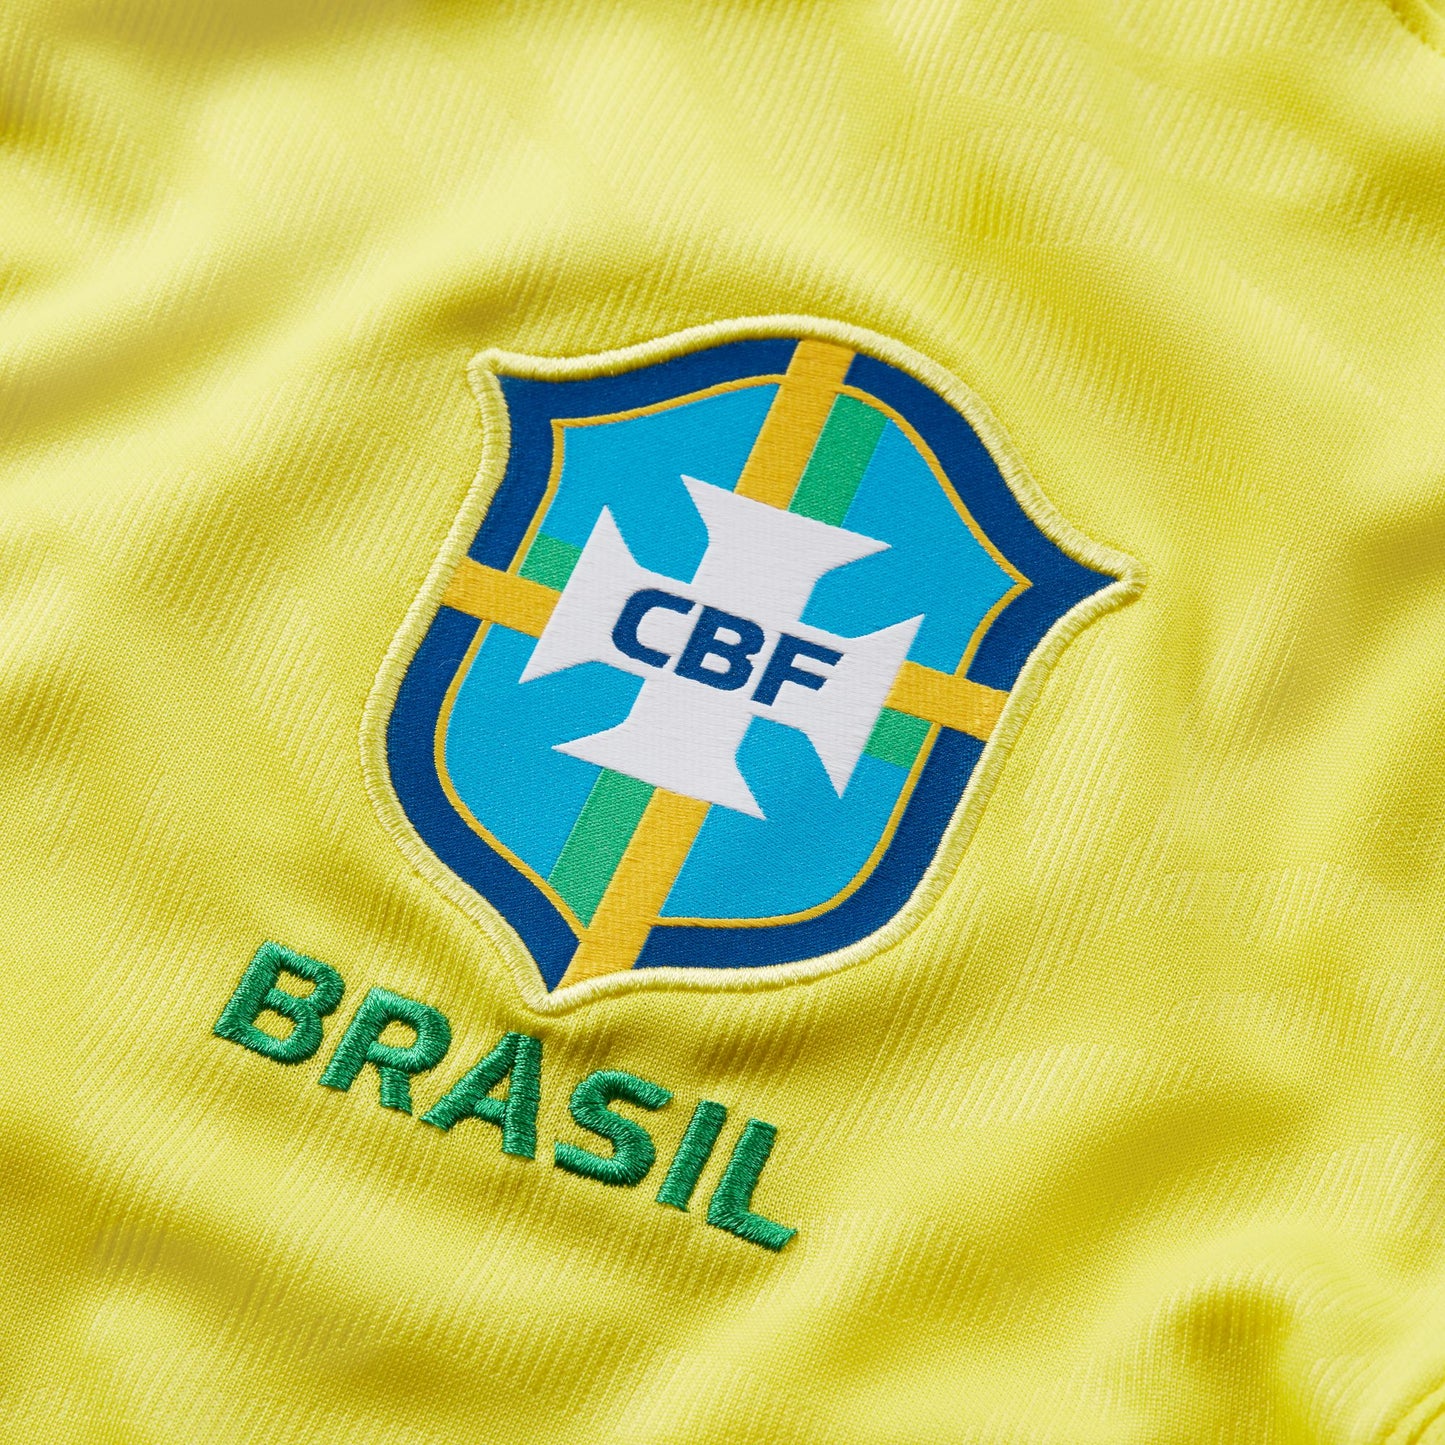 Men's Brasil 2023 Stadium Home Jersey